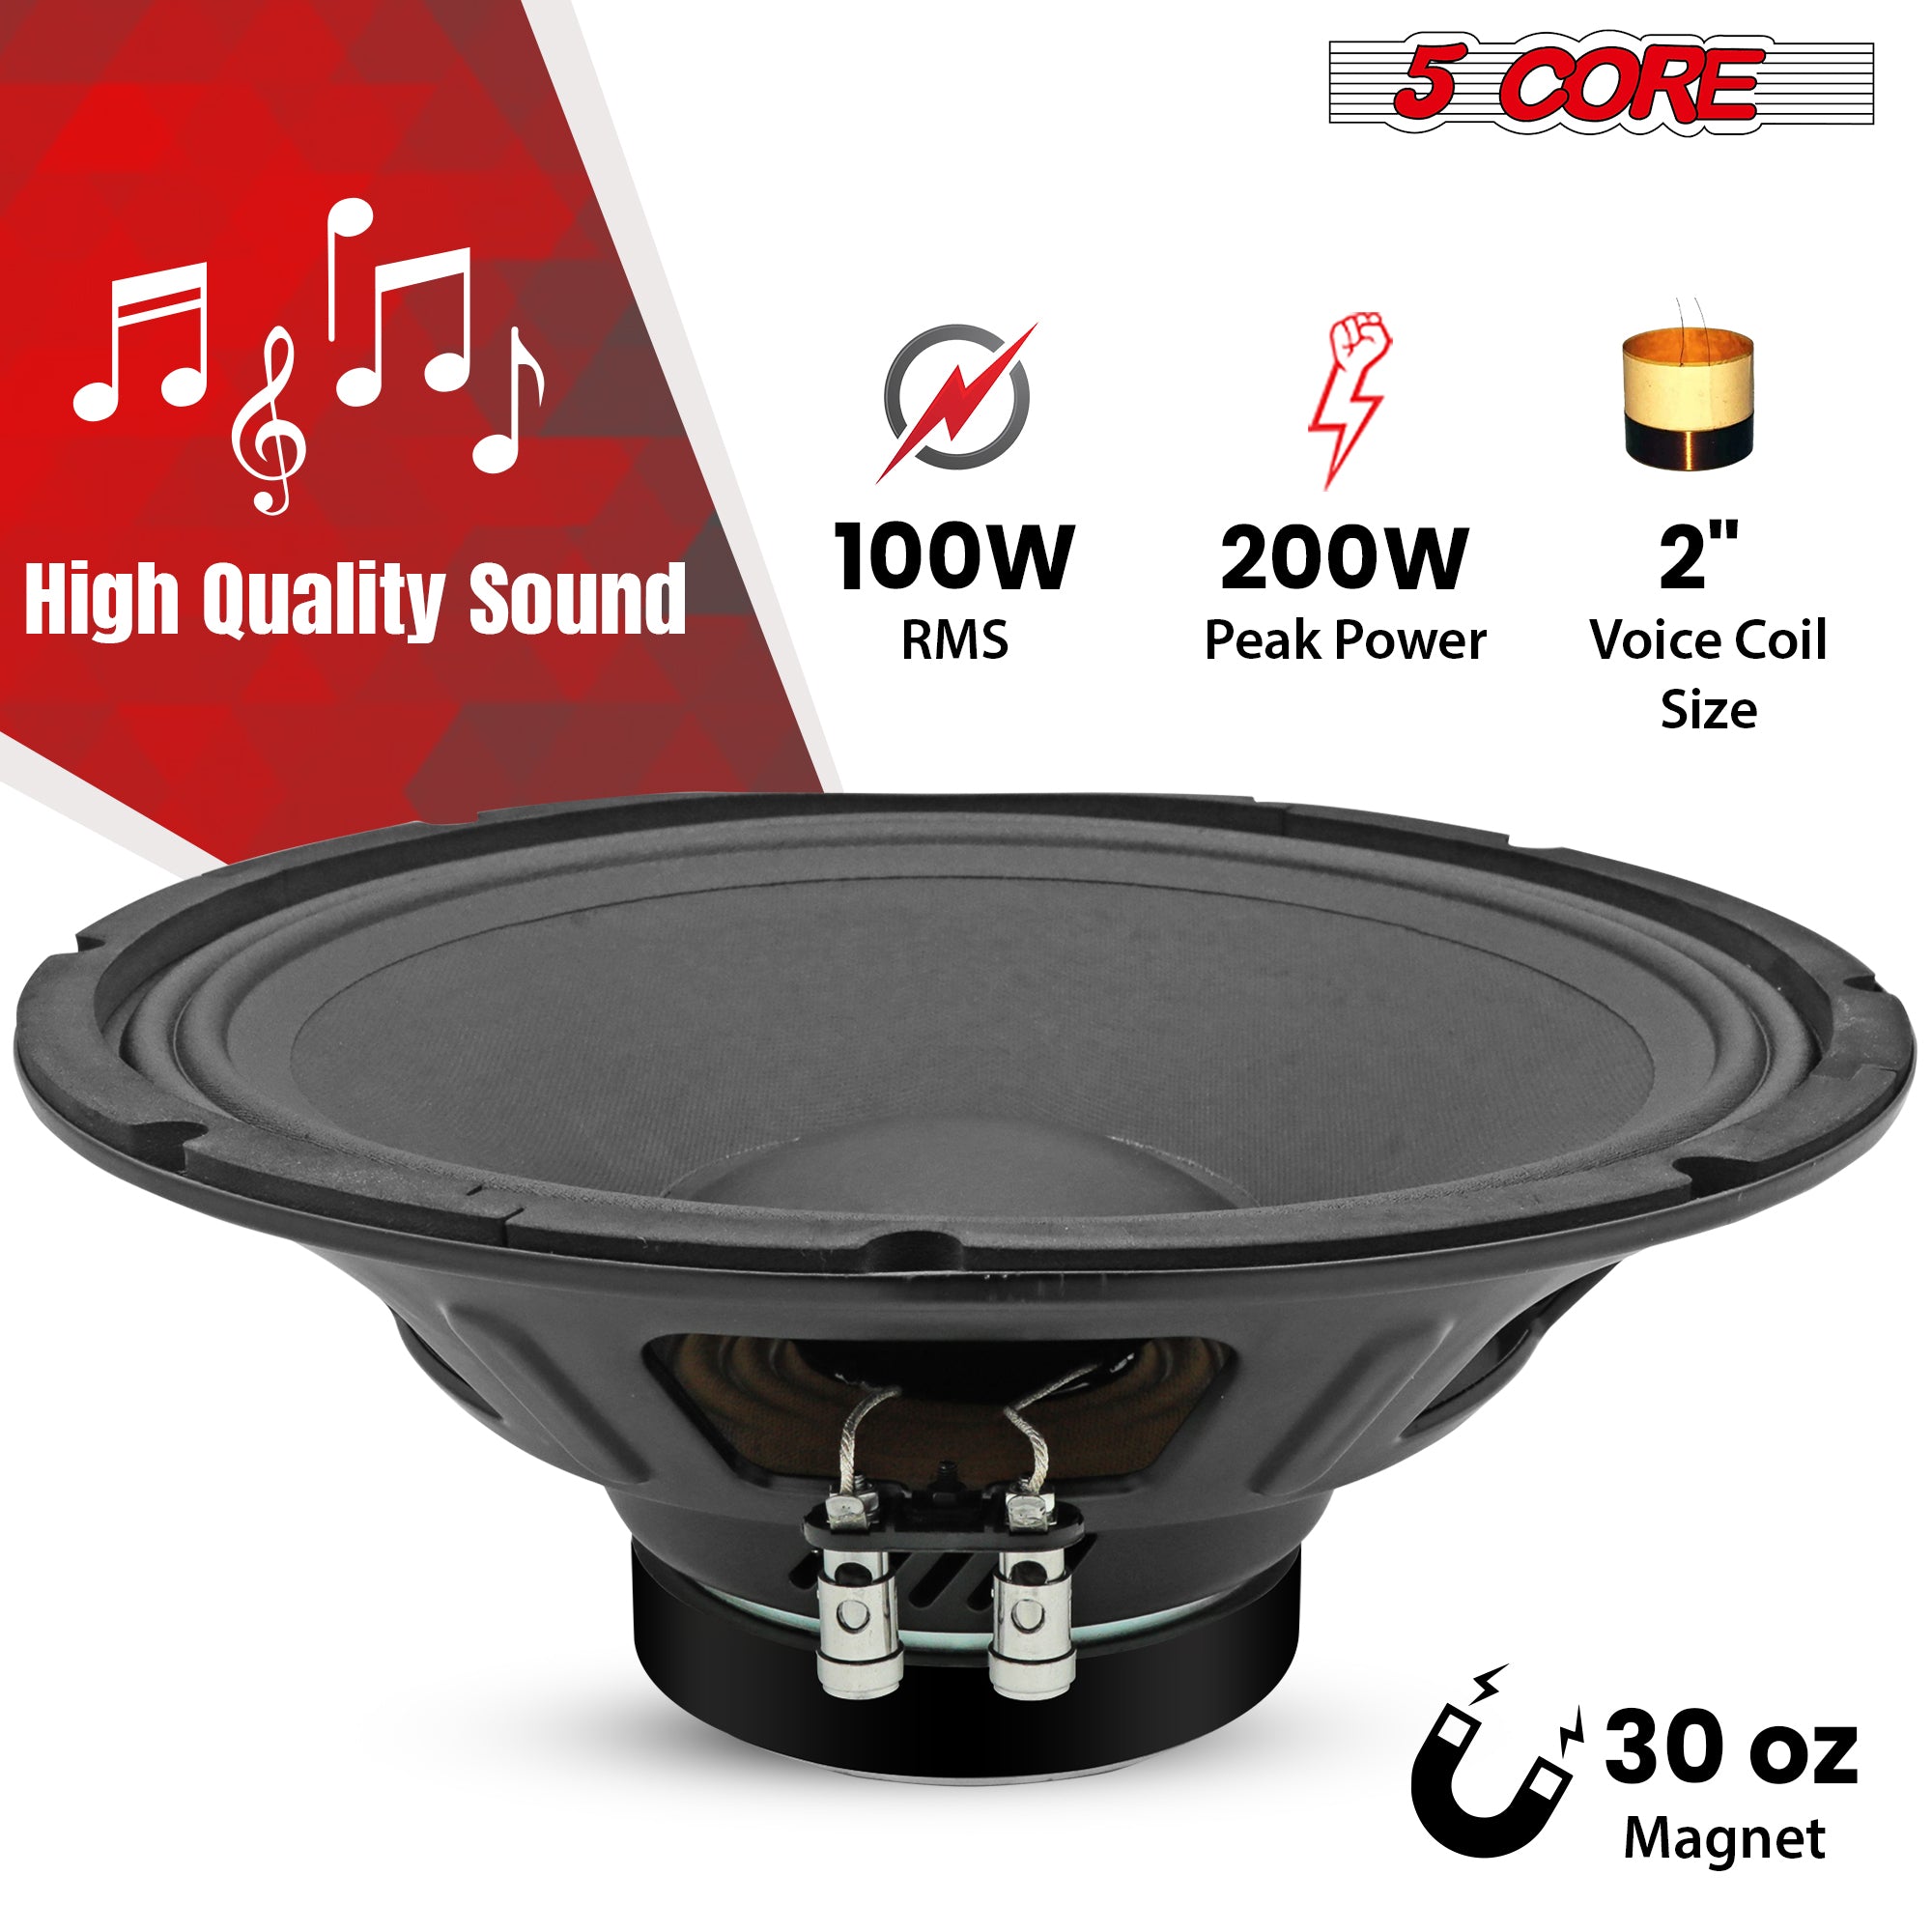 5 Core 12 inch Replacement Speaker 200W Peak Power 8 Ohm 30 Oz Magnet Pro Audio Sub Woofer Driver